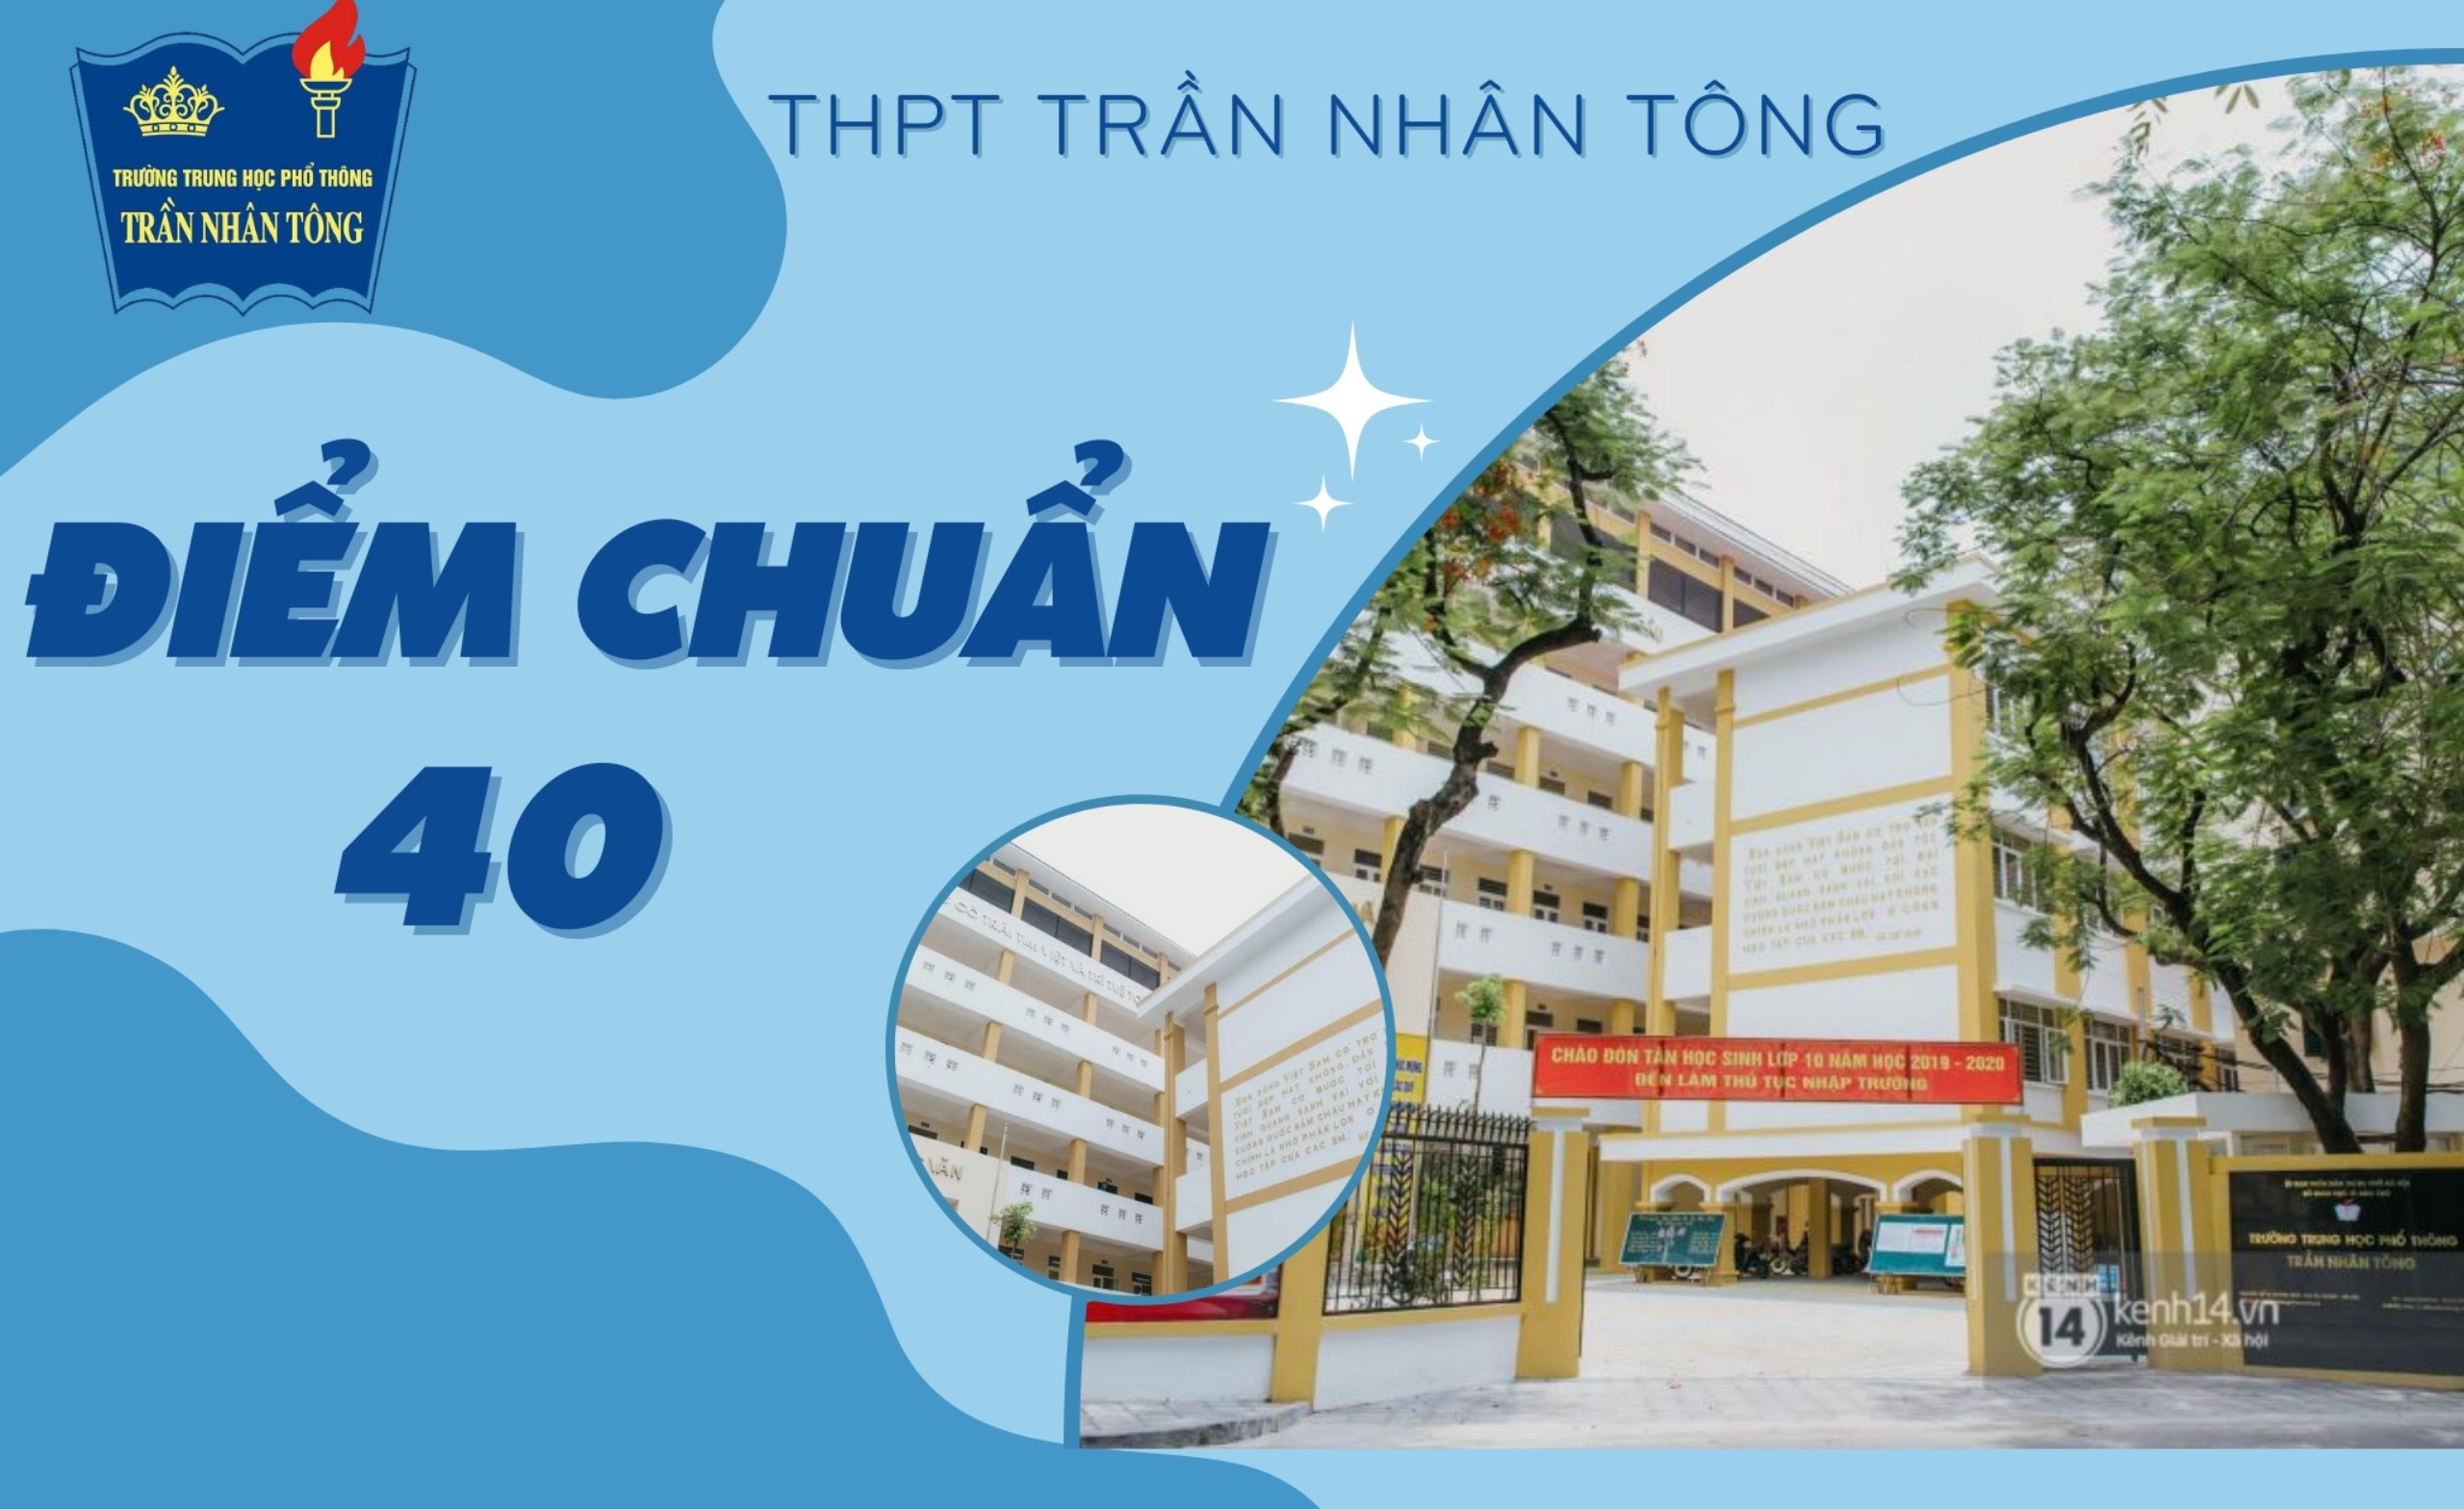 Top 10 thi sinh co diem thi cao nhat vao truong THPT Tran Nhan Tong